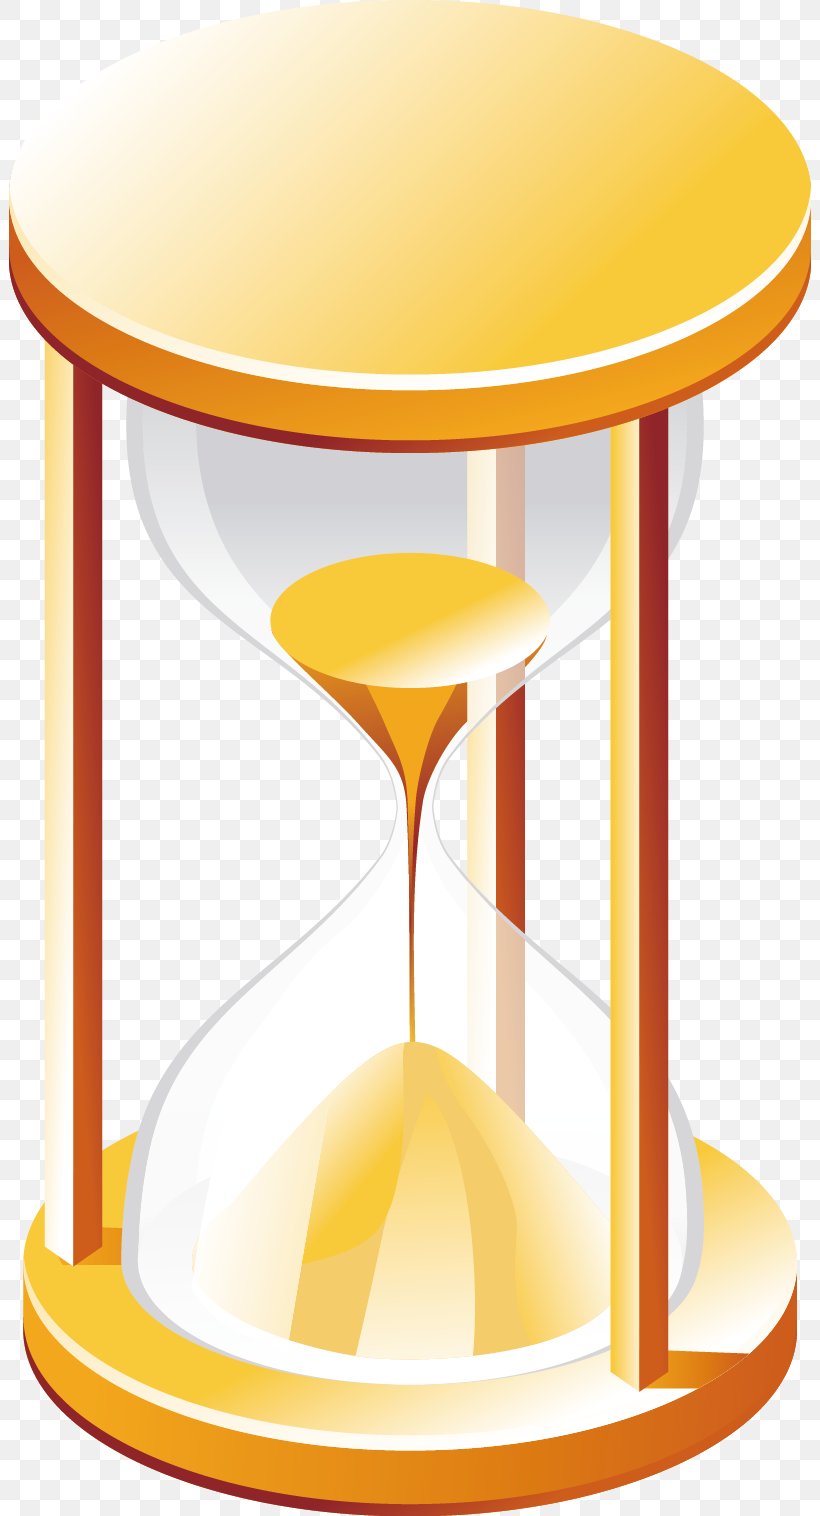 Hourglass Gratis, PNG, 802x1516px, Hourglass, Cartoon, Furniture, Gold, Gratis Download Free